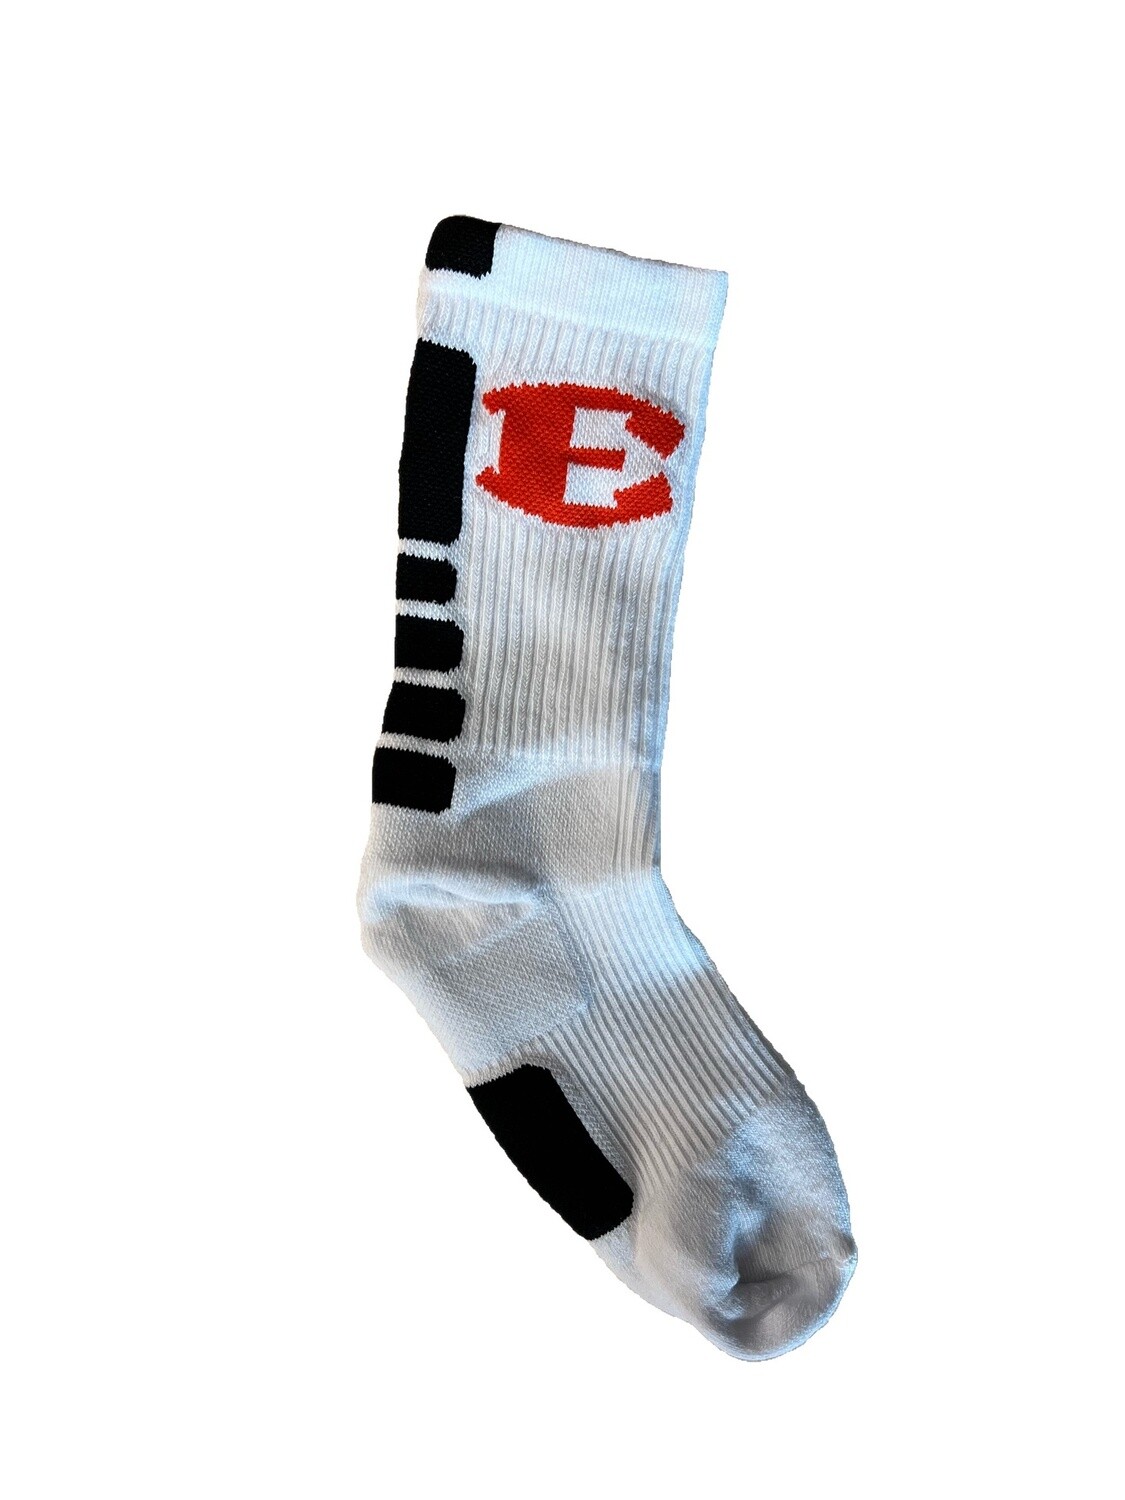 Sport Socks, Size: Sock Size 7-9, Color: White